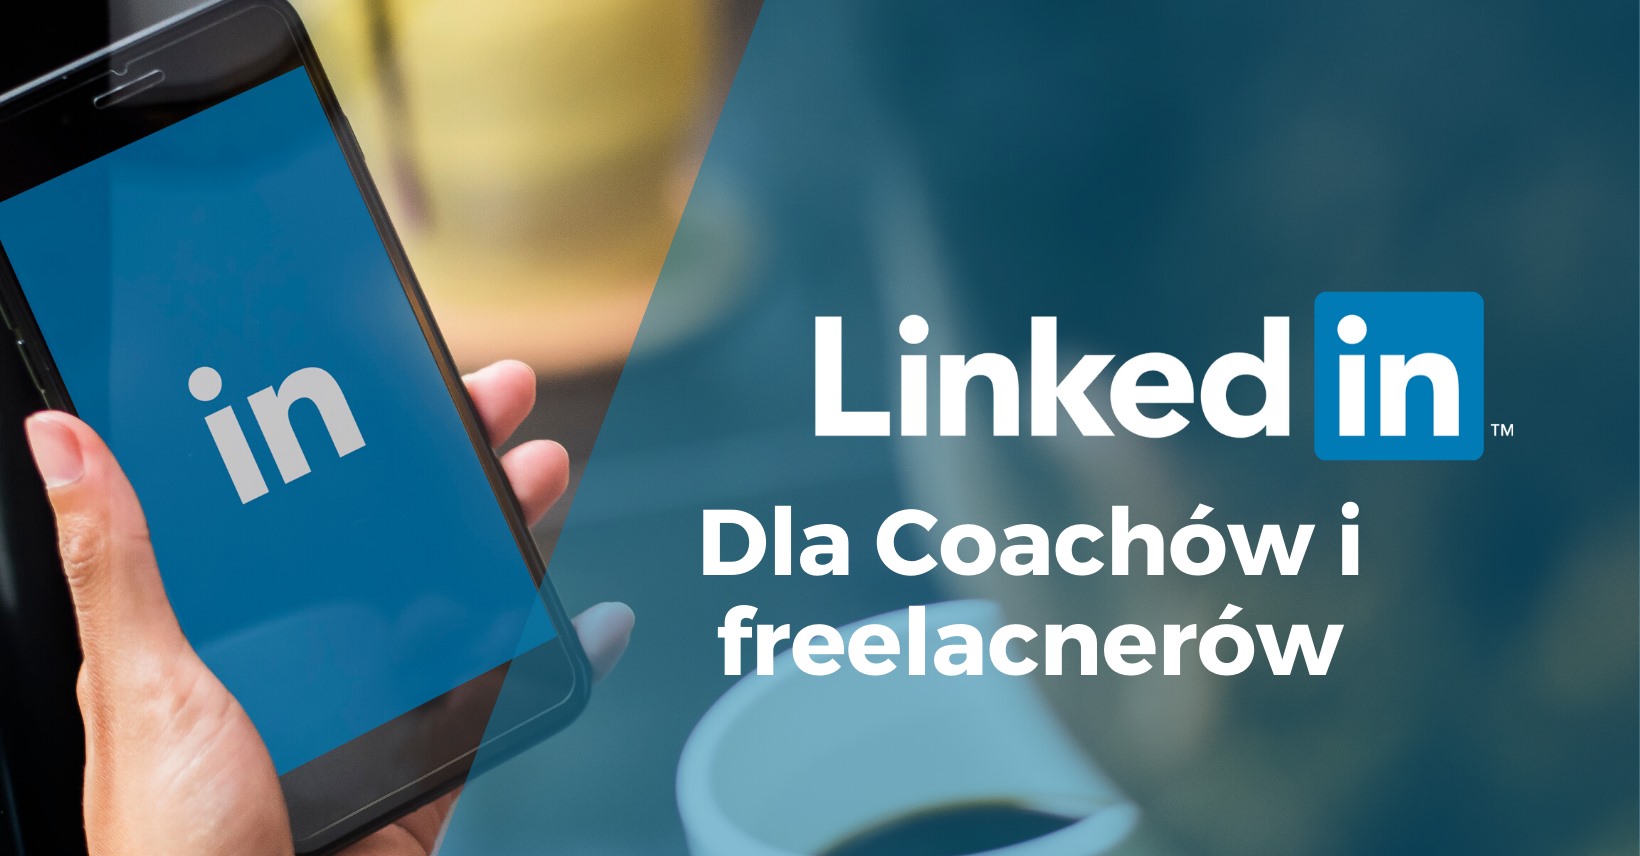 Grupa "LinkedIn dla coachów i freelancerów" na Facebooku